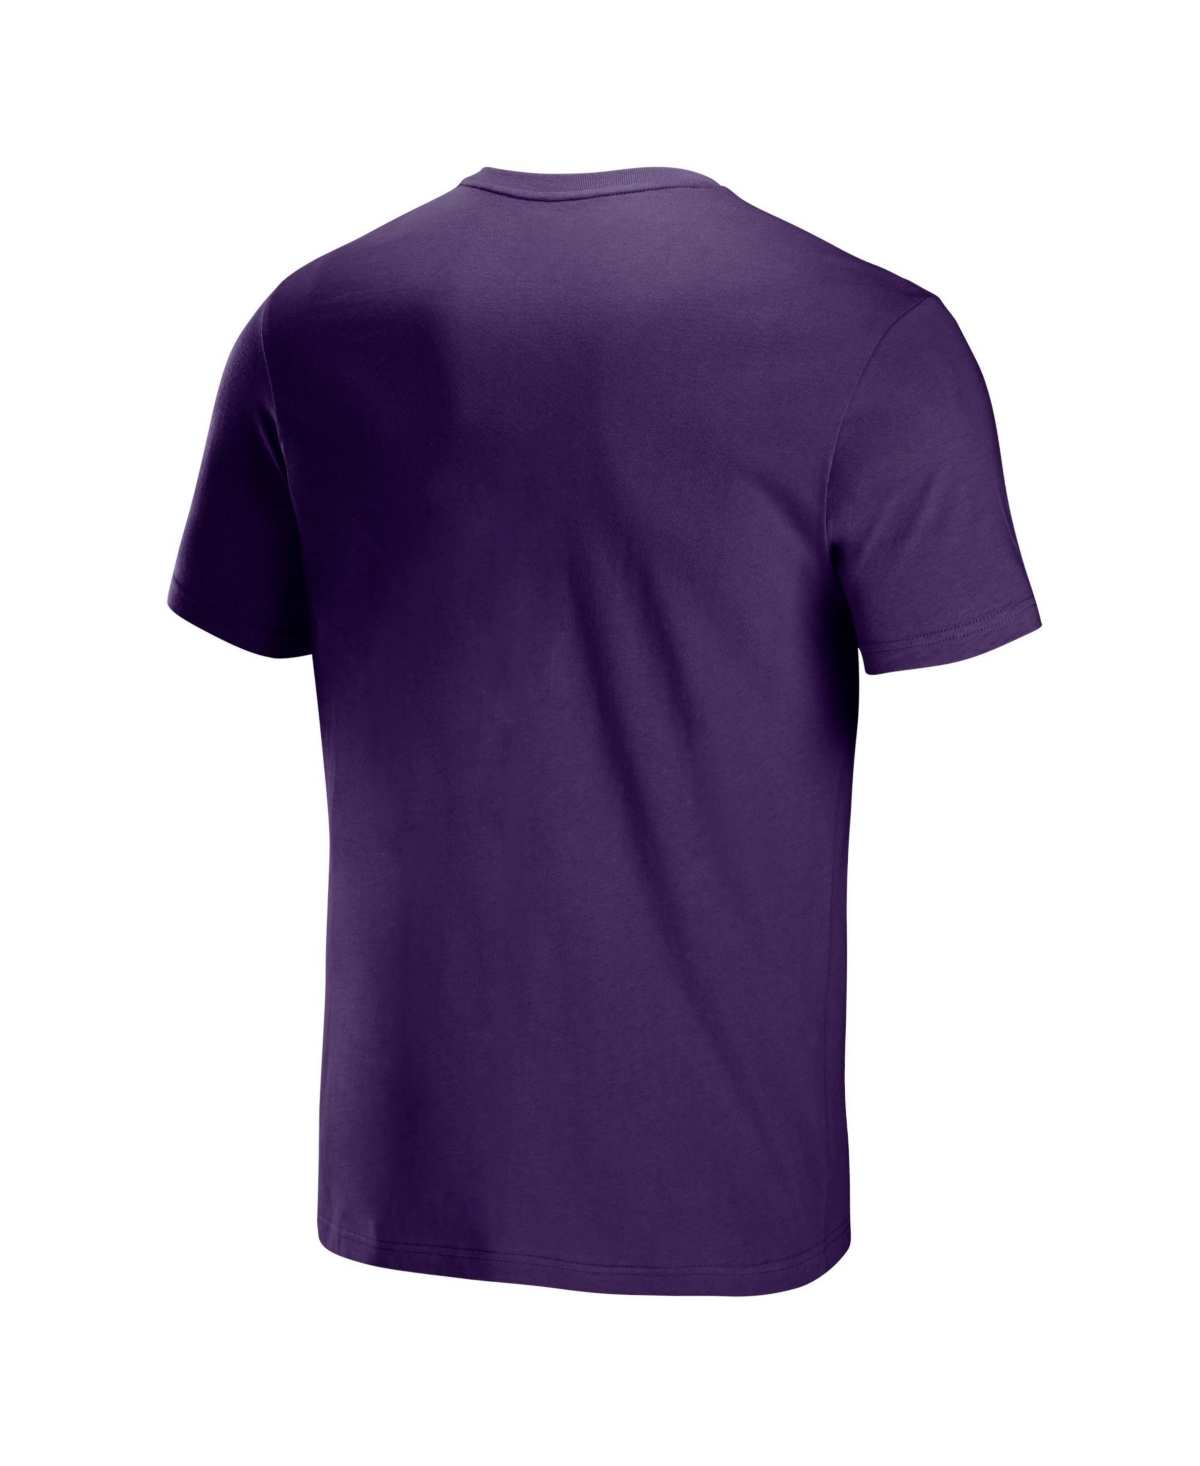 Shop Nfl Properties Men's Nfl X Staple Purple Baltimore Ravens Lockup Logo Short Sleeve T-shirt